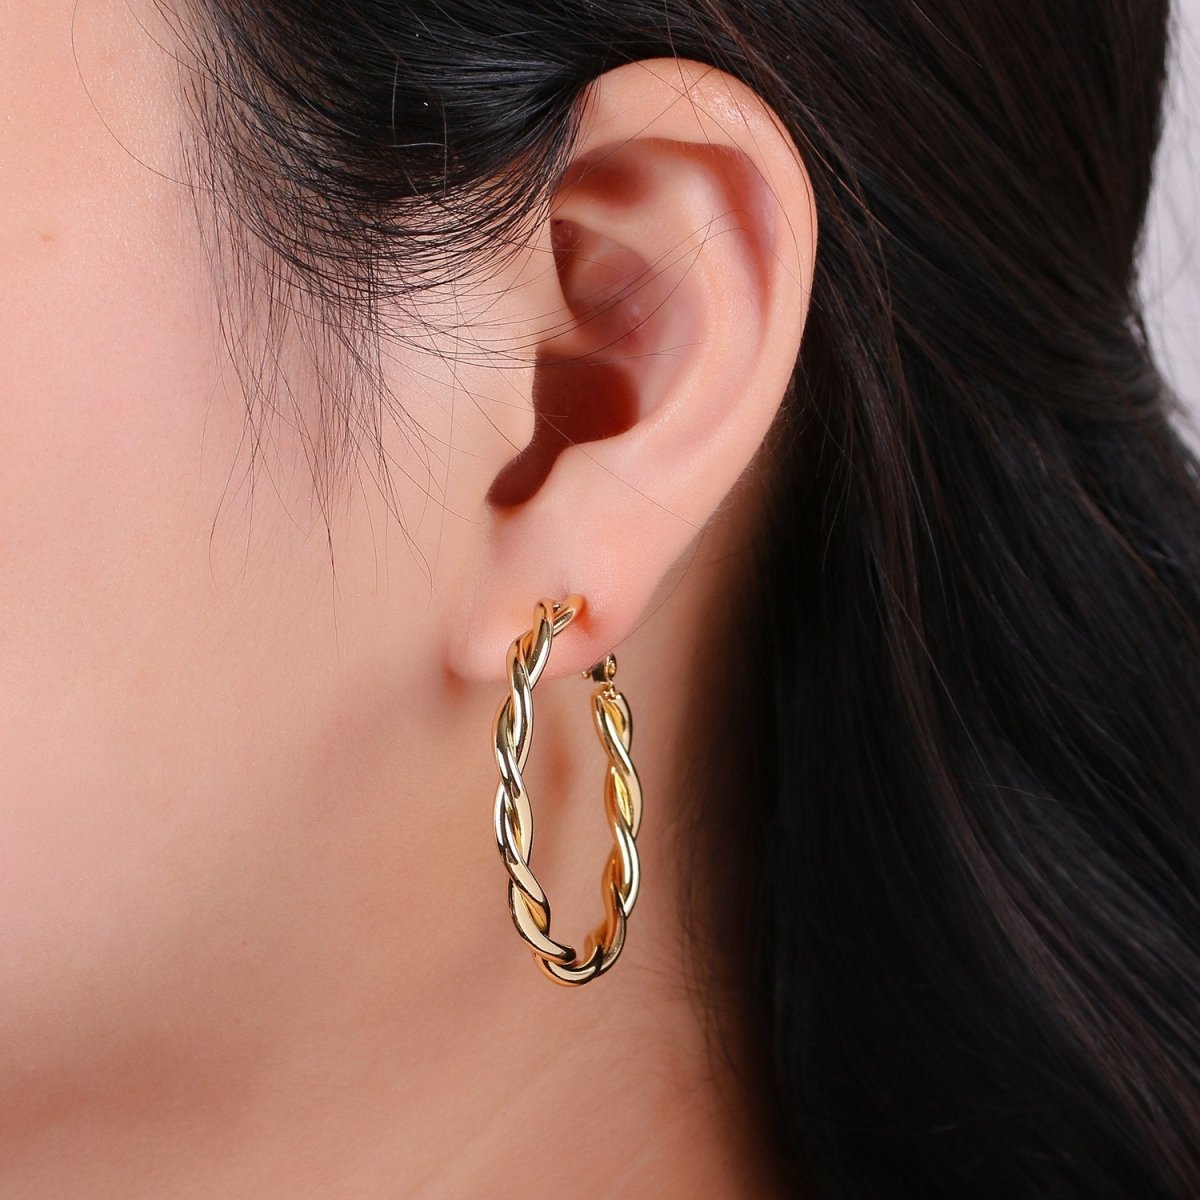 24k Vermeil Gold Earrings, Hoop Earrings, Medium Hoop, Twisted Rope Texture Earring, Gift for Her, Earrings for Women, Everyday Wear Earring Q-213 - DLUXCA